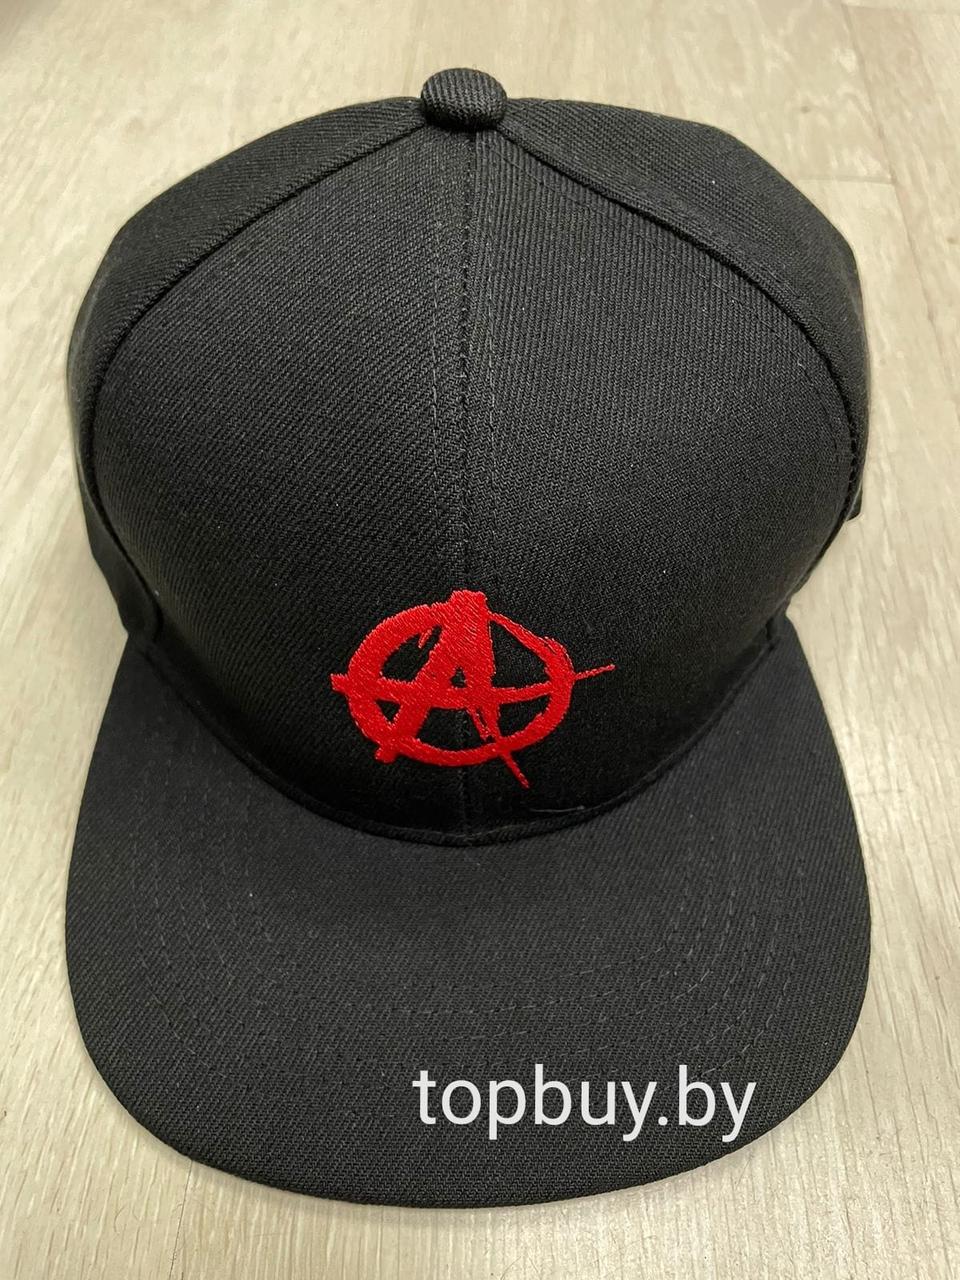 Бейсболка с логотипом "анархия".